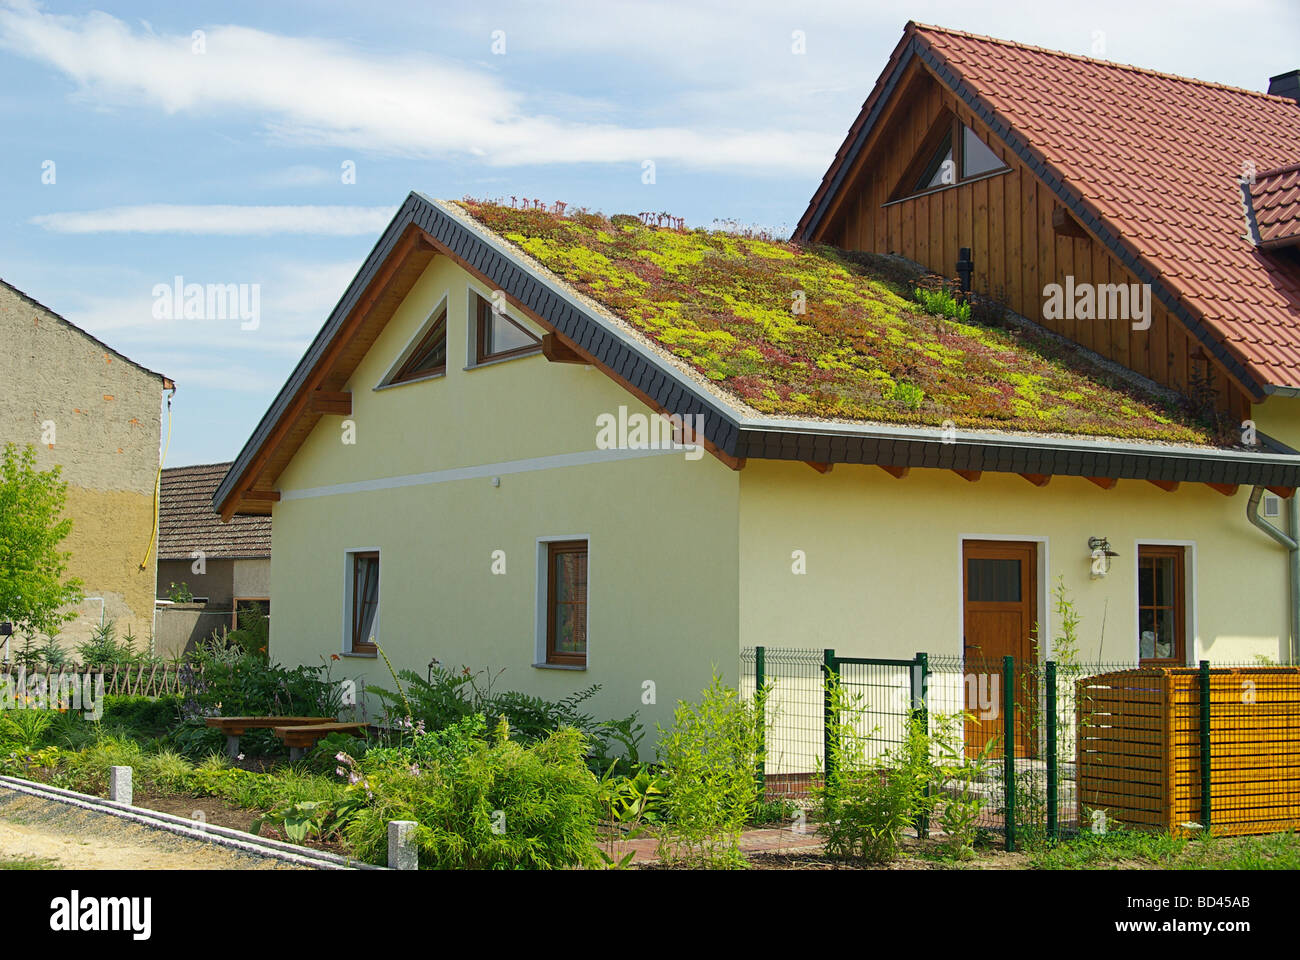 Gründach green roof 03 Stock Photo